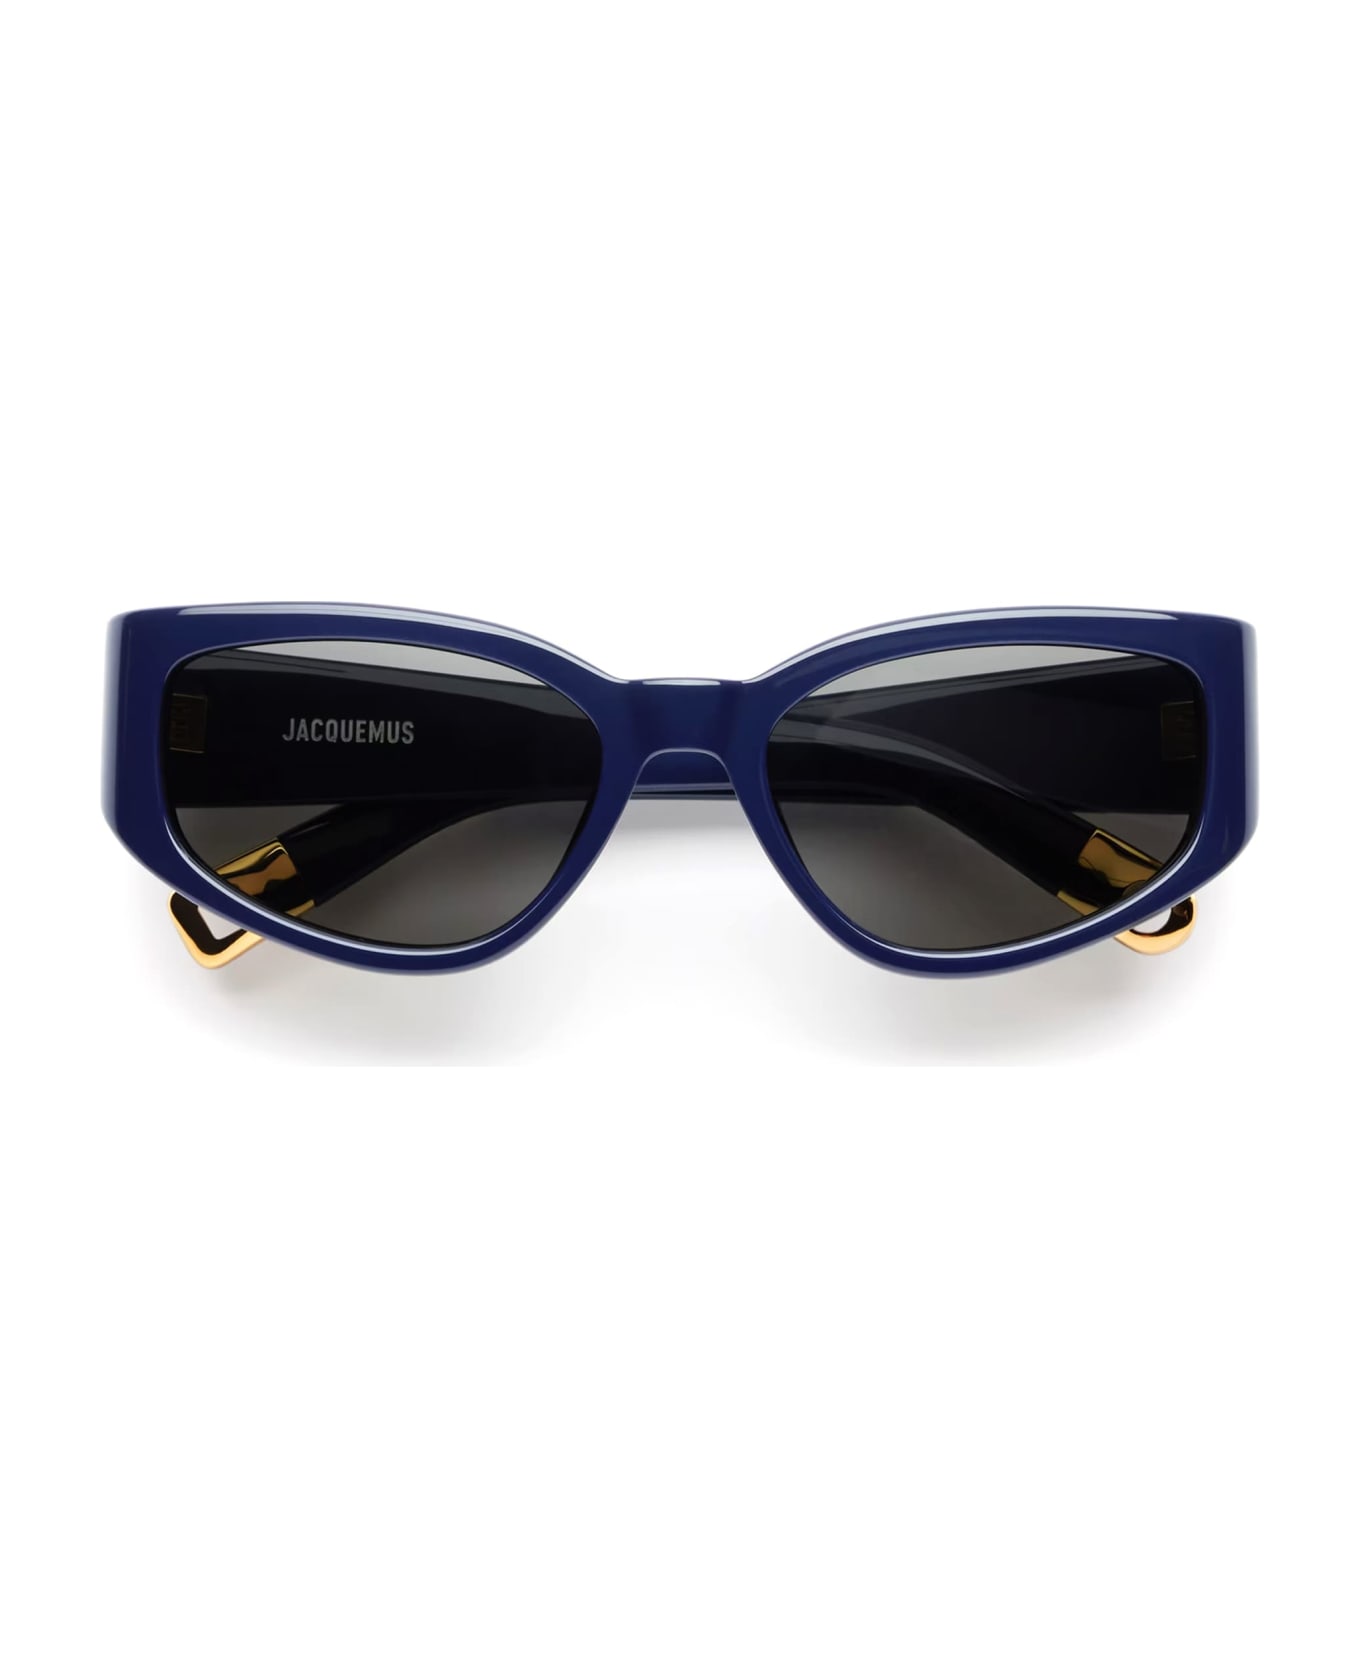 Jacquemus Gala - Navy Sunglasses - navy blue